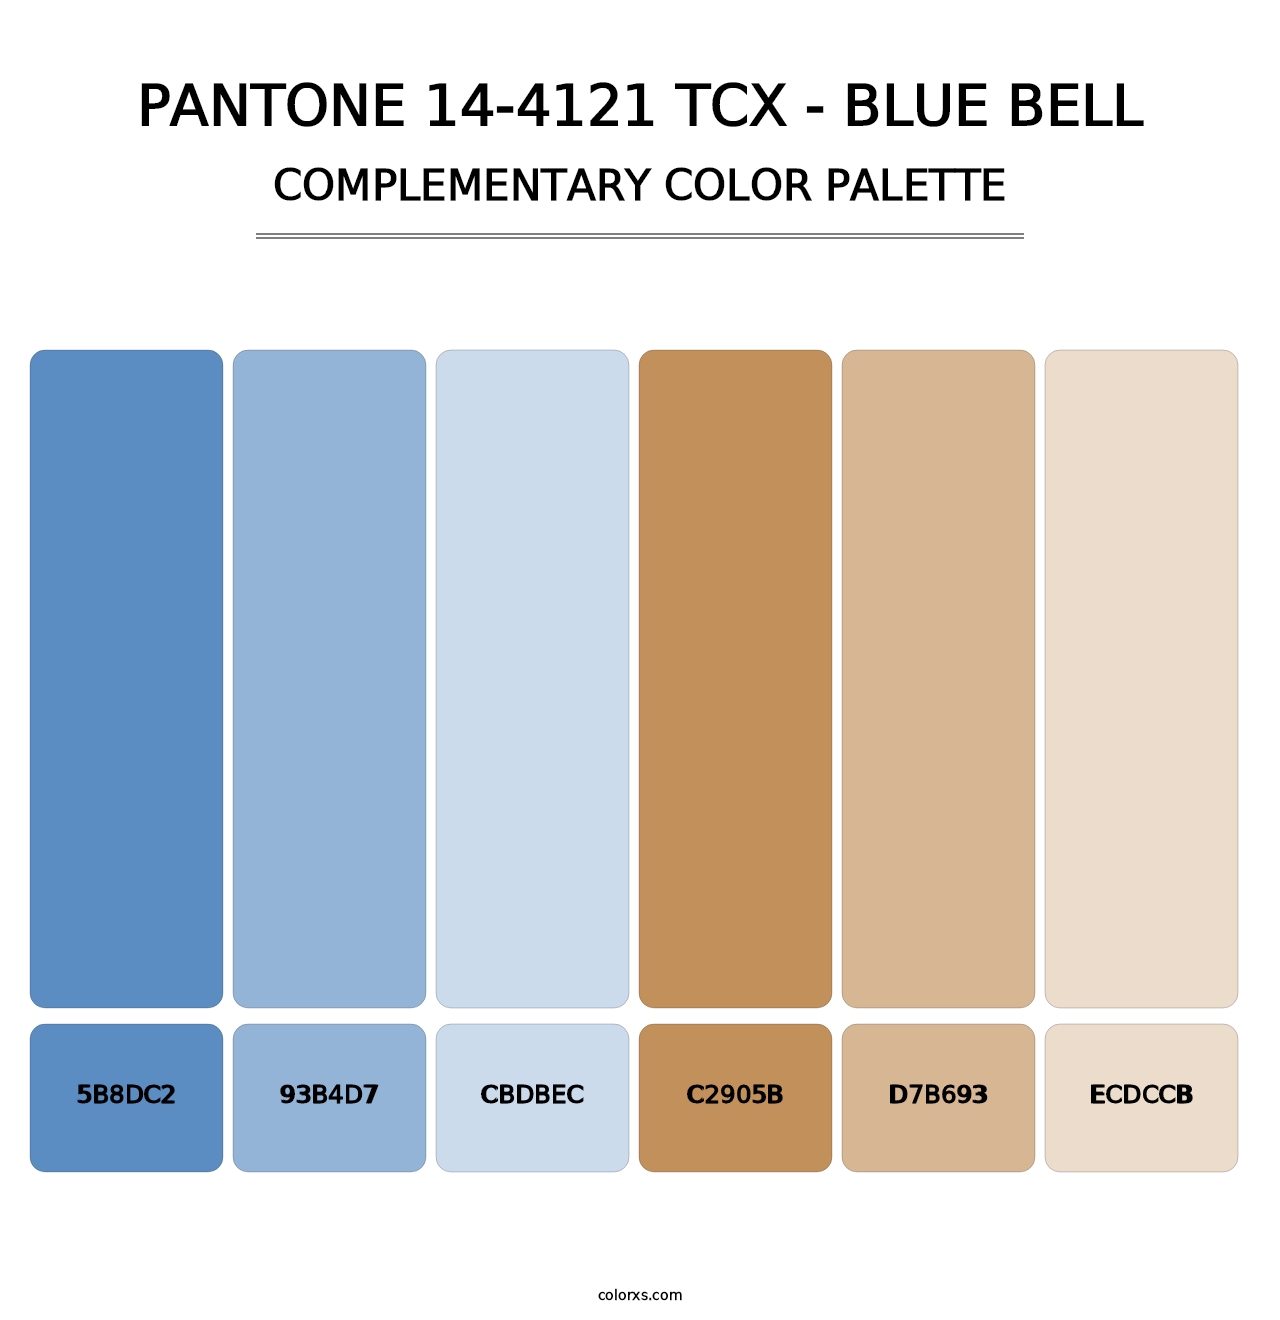 PANTONE 14-4121 TCX - Blue Bell - Complementary Color Palette